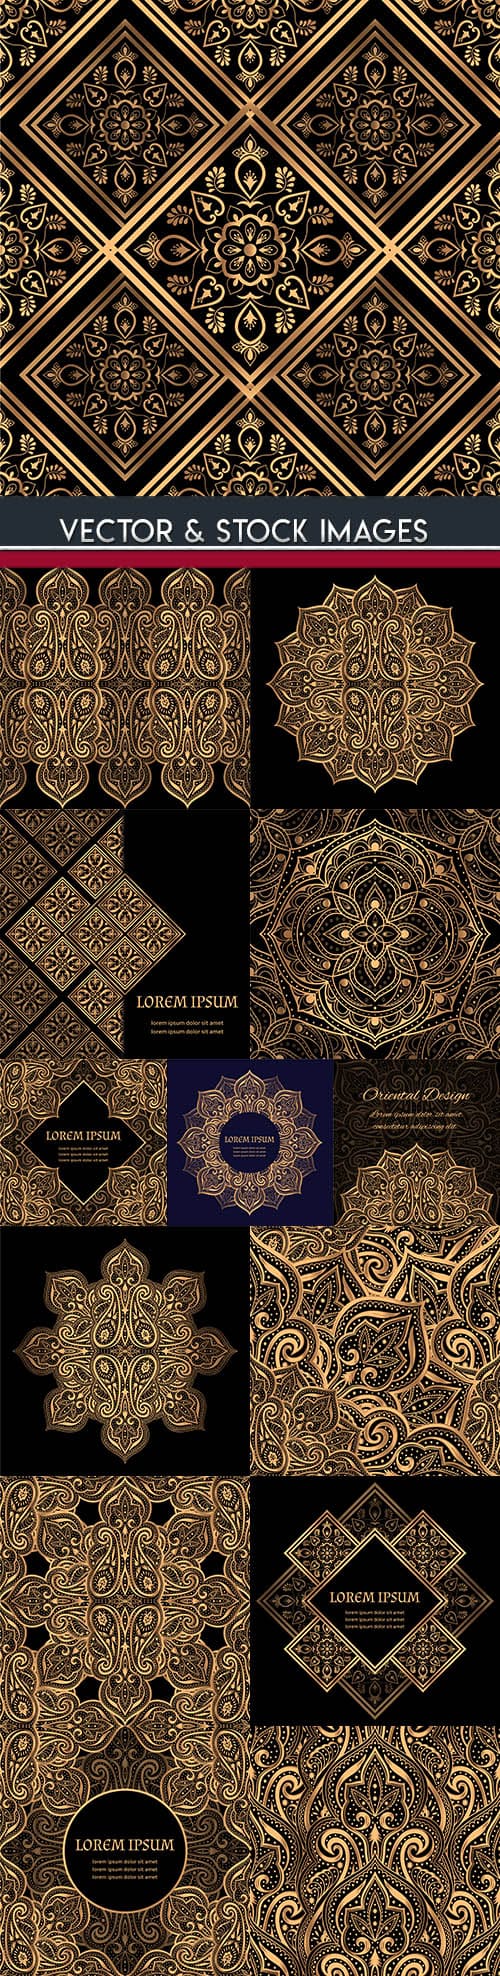 Decorative pattern and mandala gold design